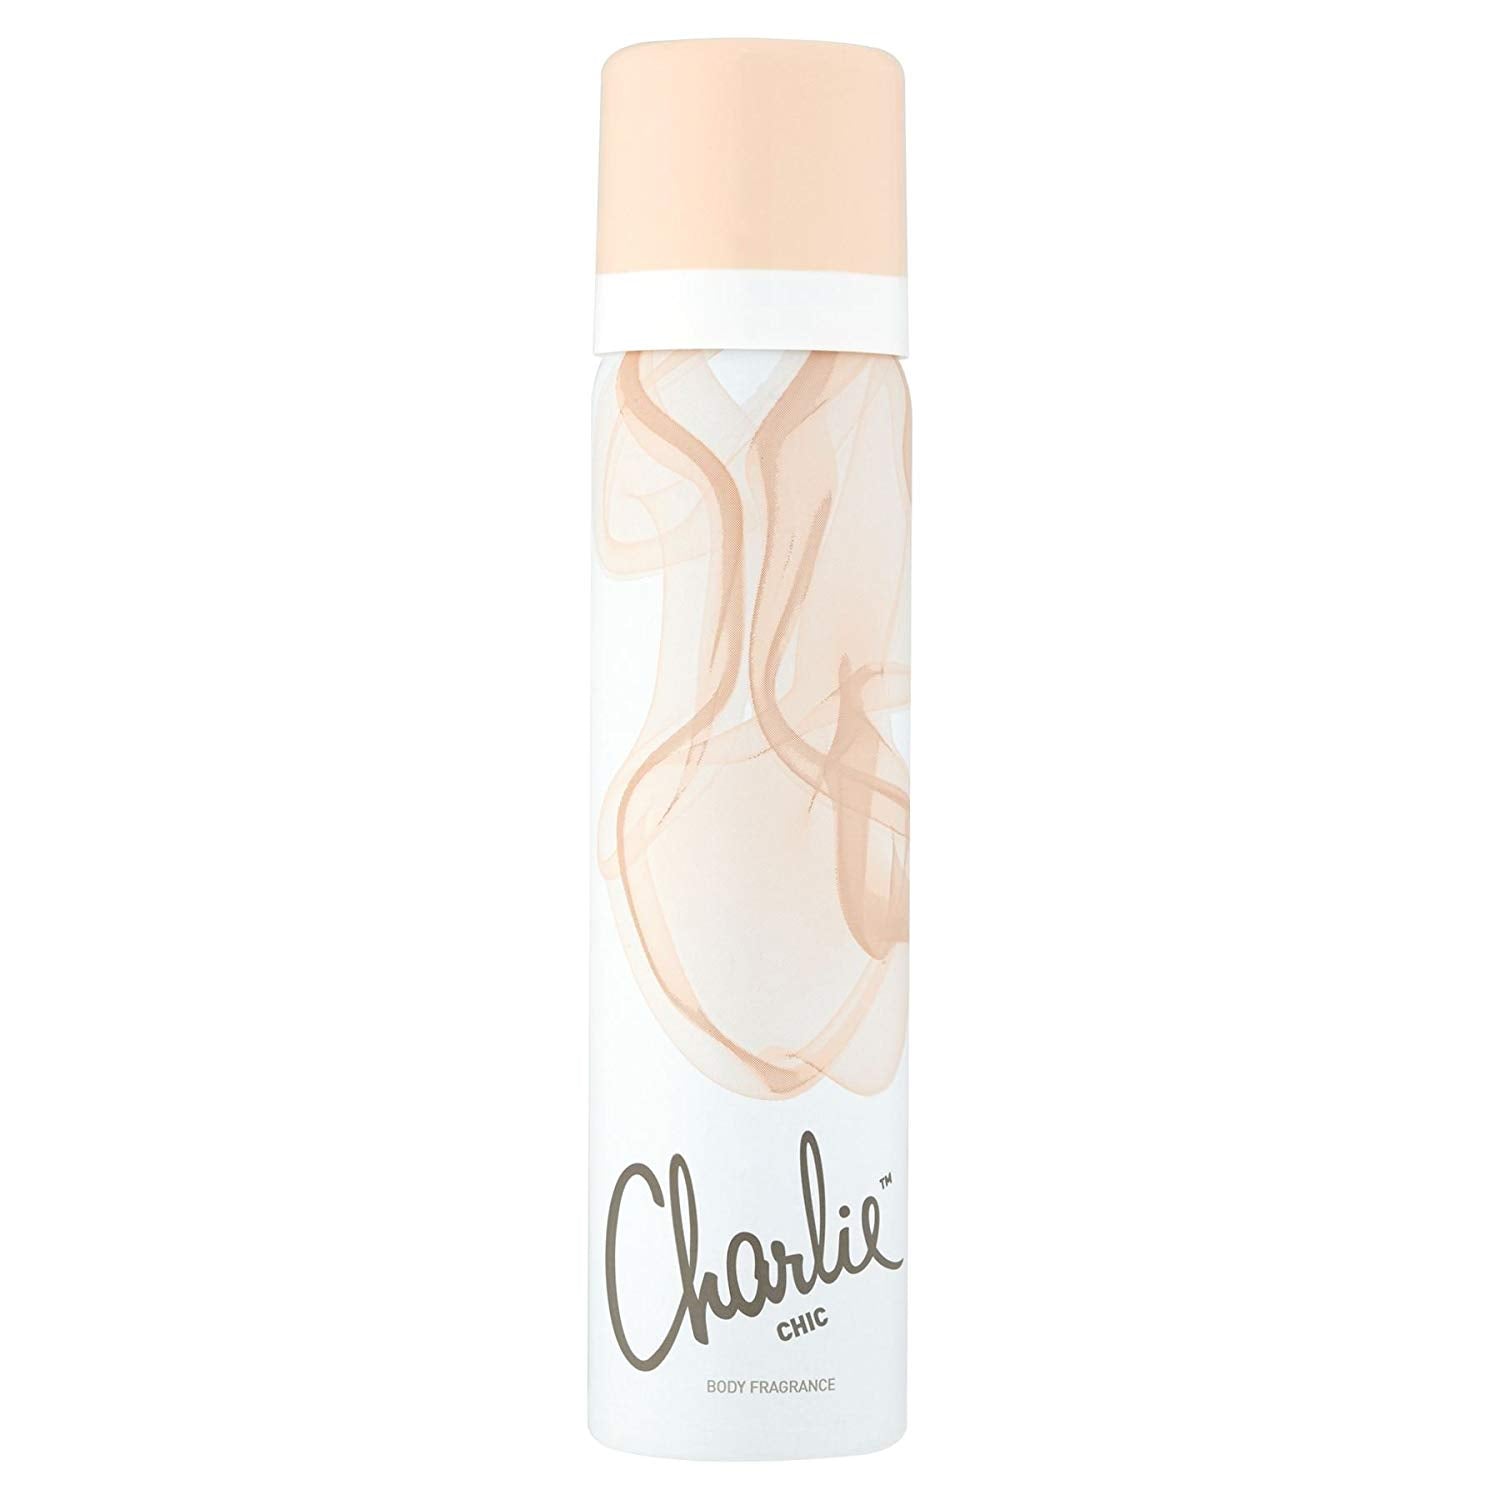 Revlon Charlie Chic Body Spray - Dollars and Sense